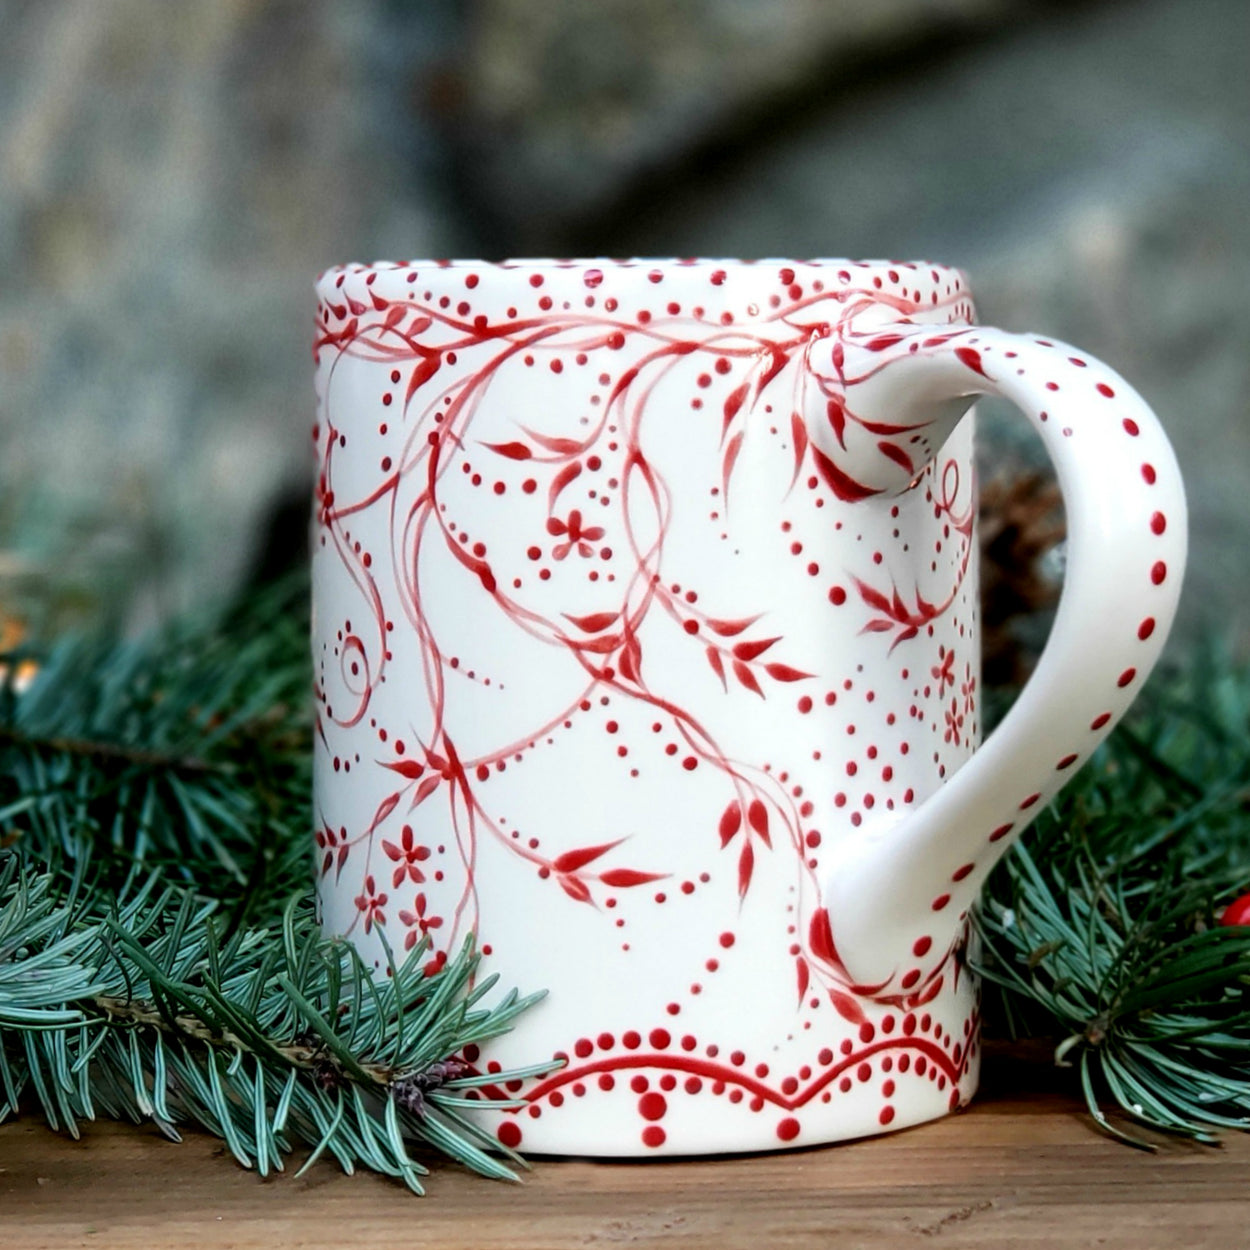 et little vines, teeny flowers and tiny polka dots. 15 oz kiln fired ceramic mug with a soft satin glaze